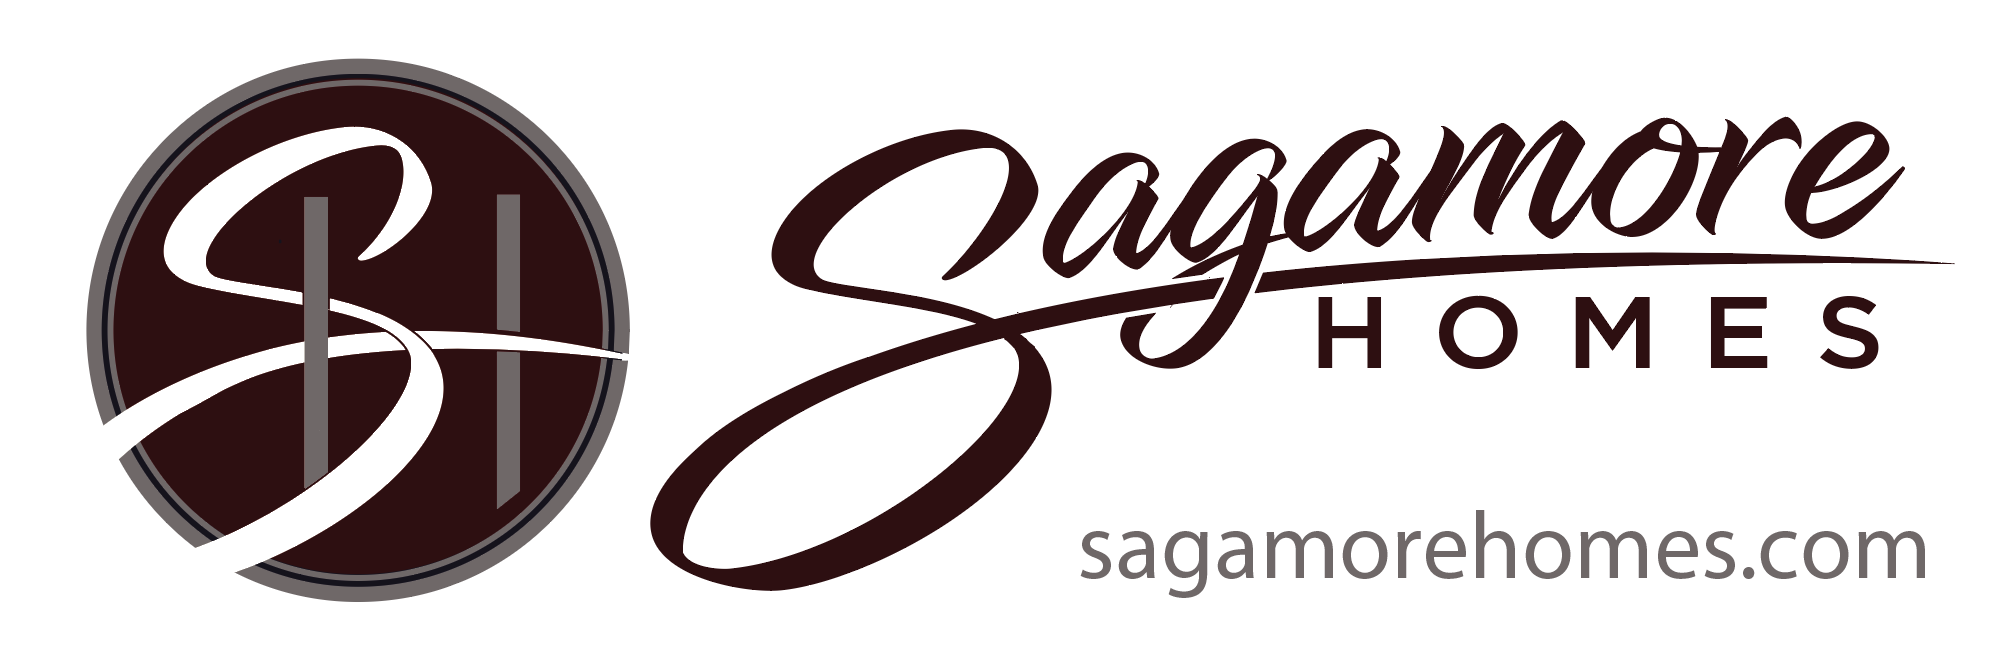 Sagamore Homes Color Logo for Promos[12947]